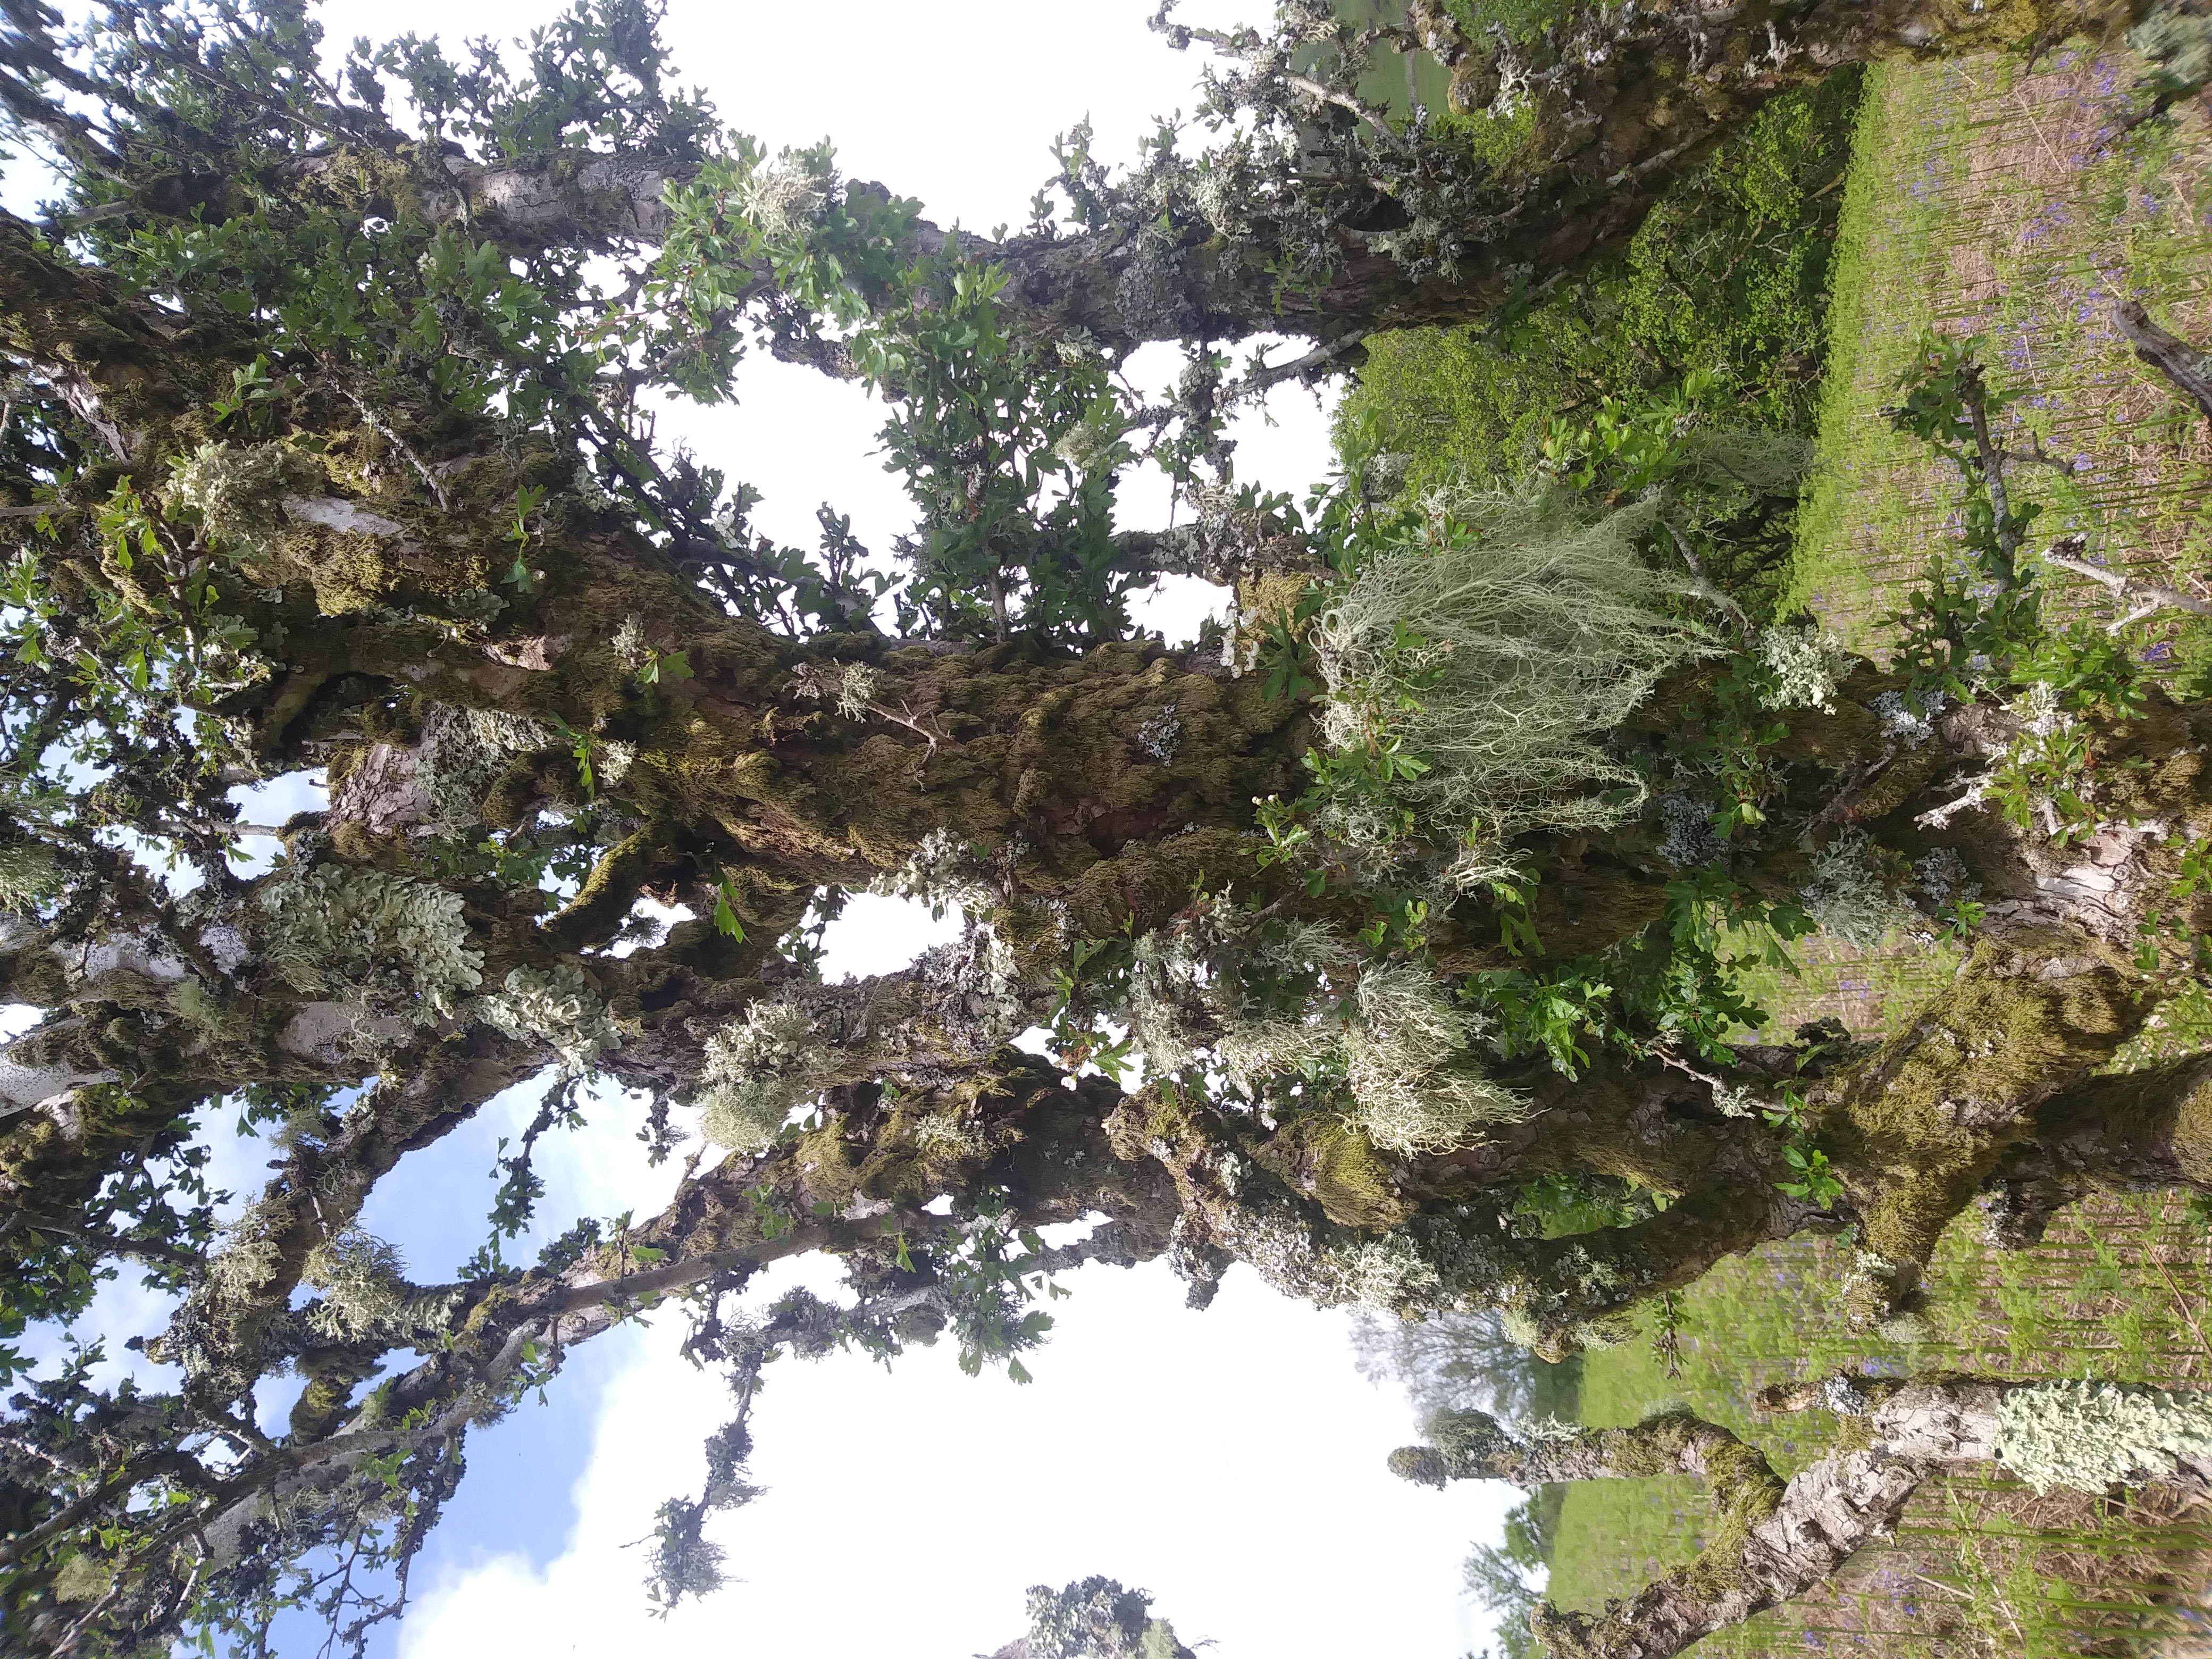 A hawthorn tree with a dense colony of lichens. Photo: Doug Lloyd